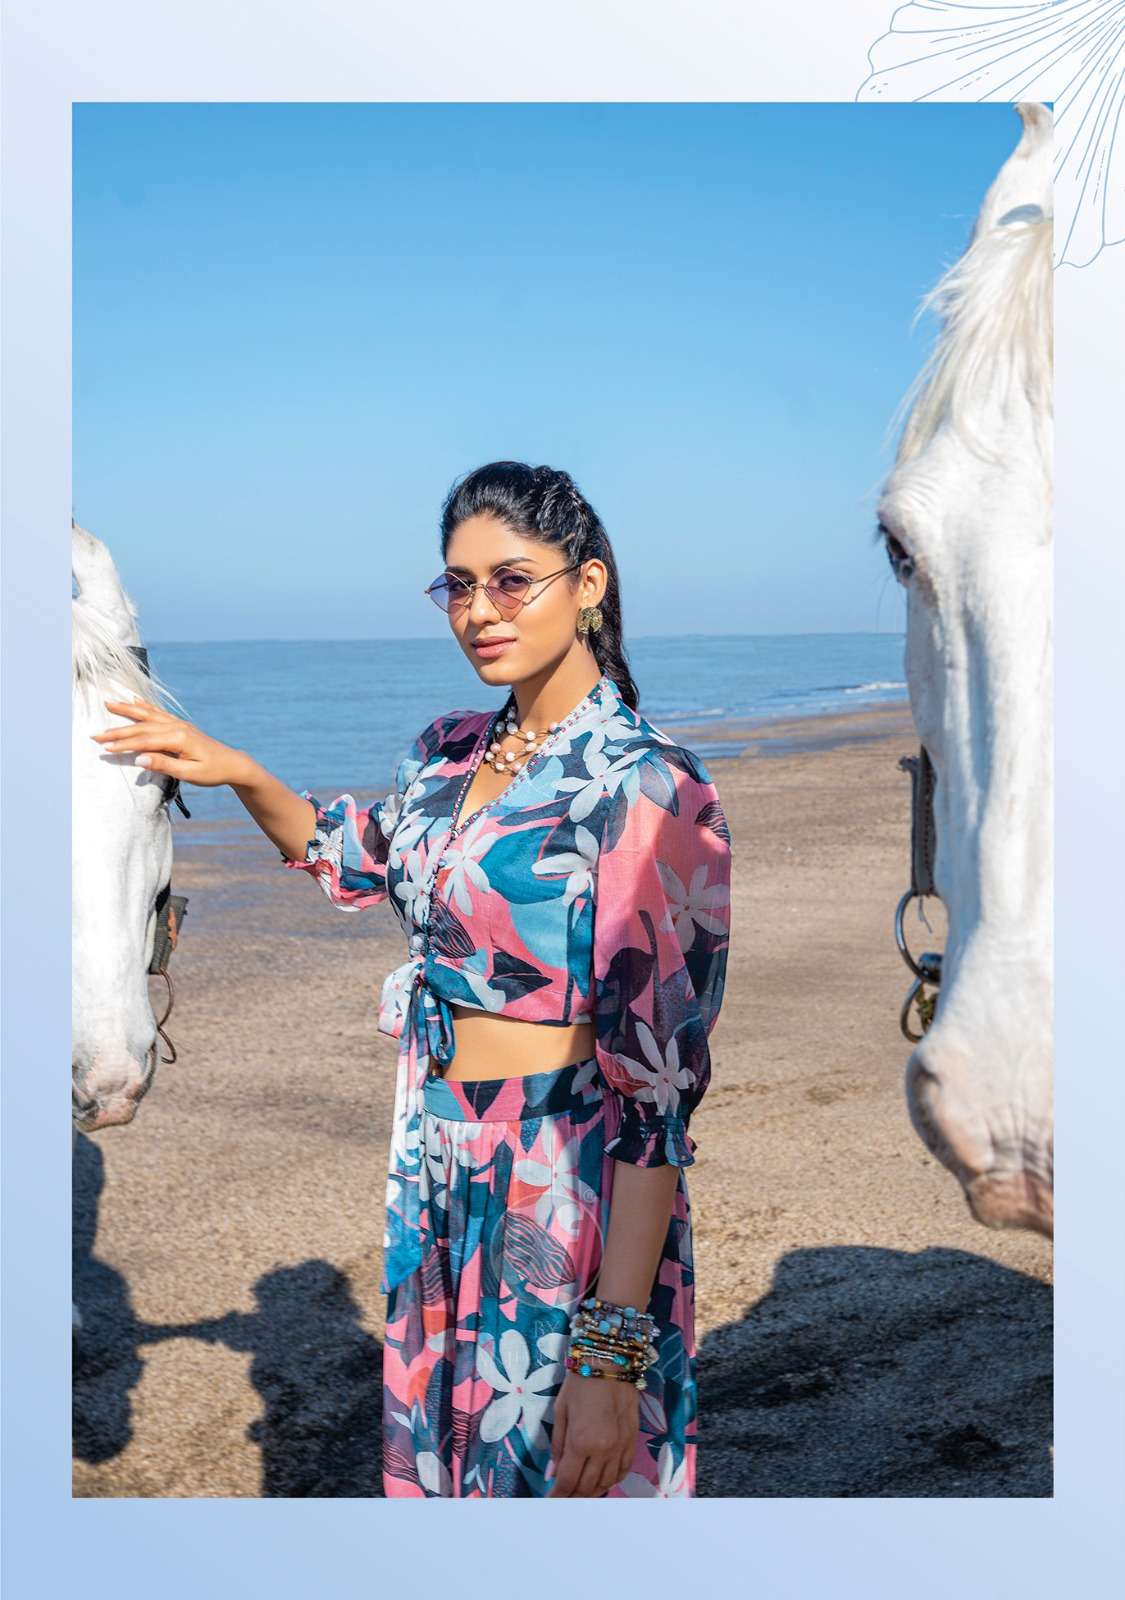 Anju Fabrics Hello Summer Kurti Wholesale catalog